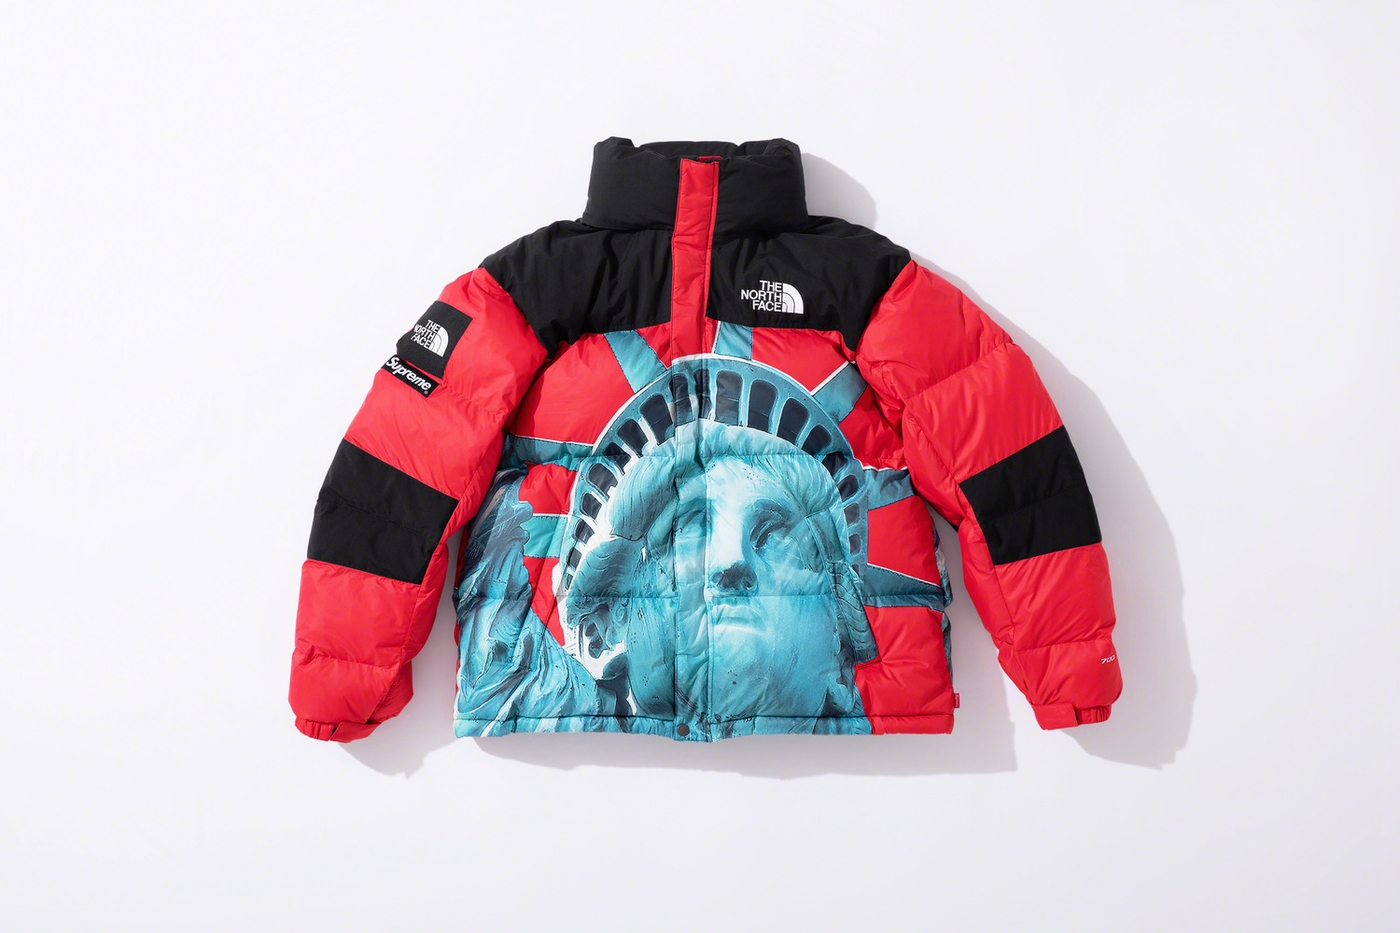 Statue of Liberty Baltoro Jacket with packable hood. (10/29)